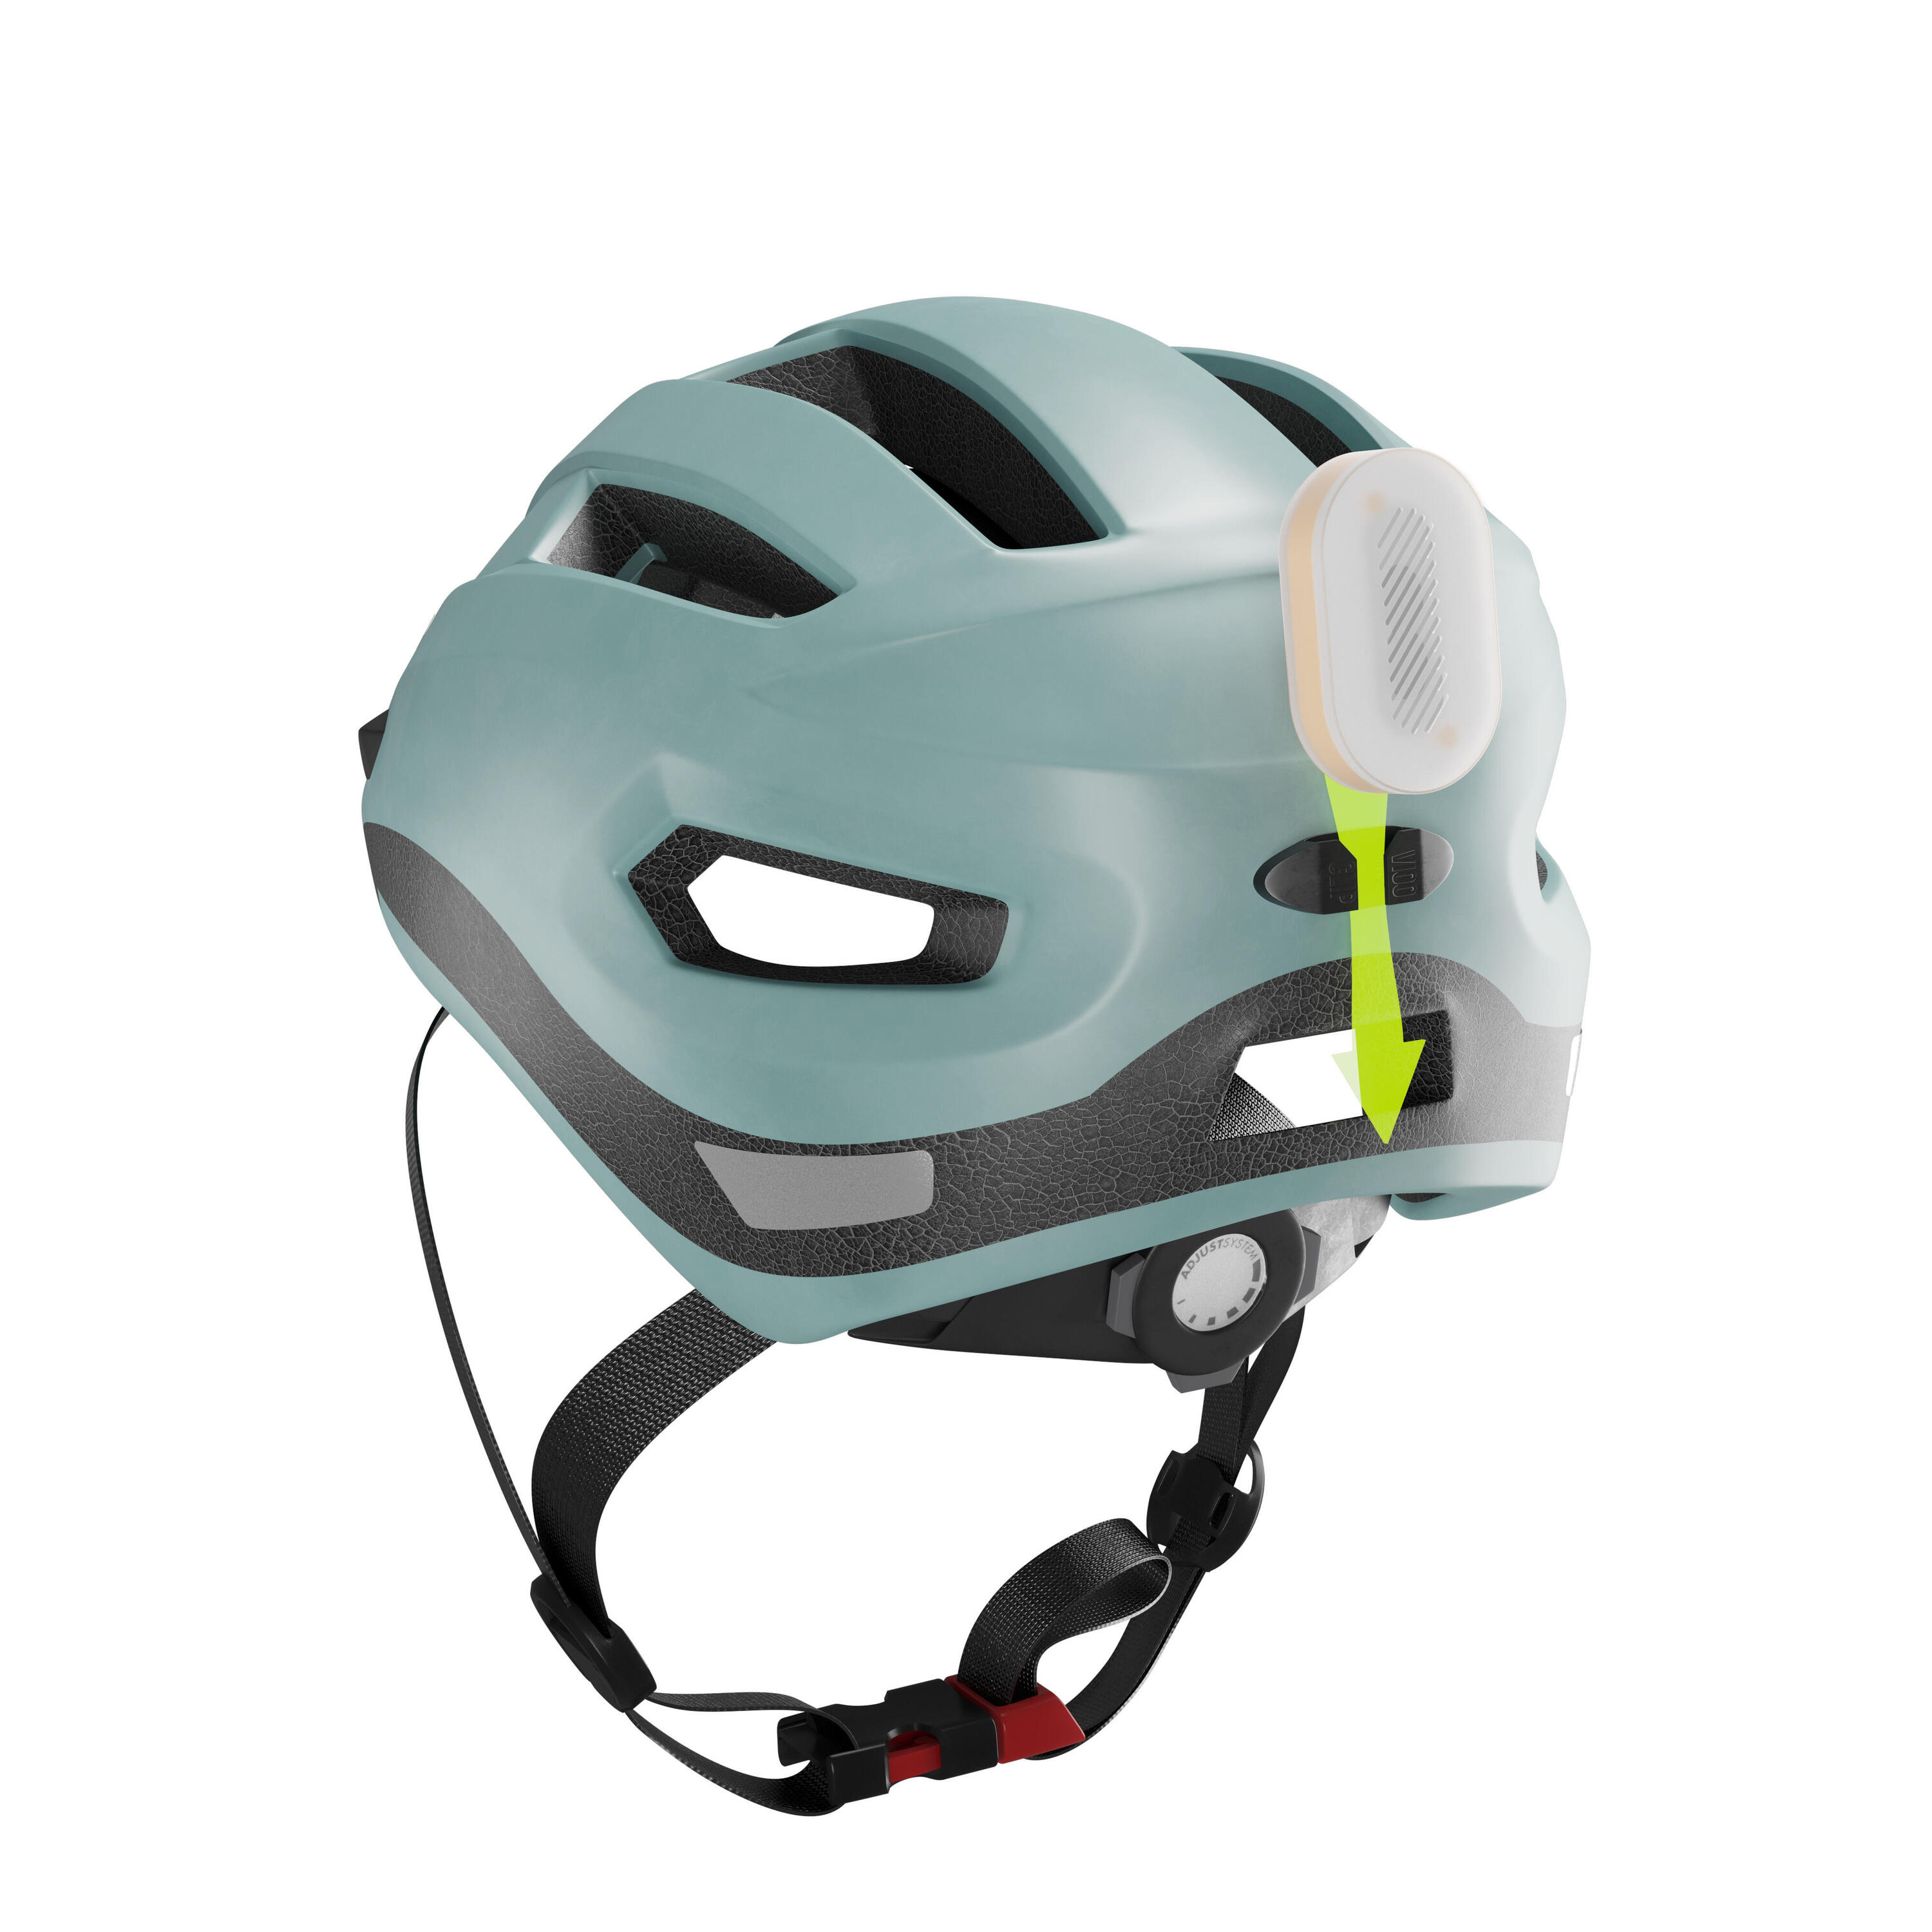 City Cycling Helmet 500 - Green 4/5